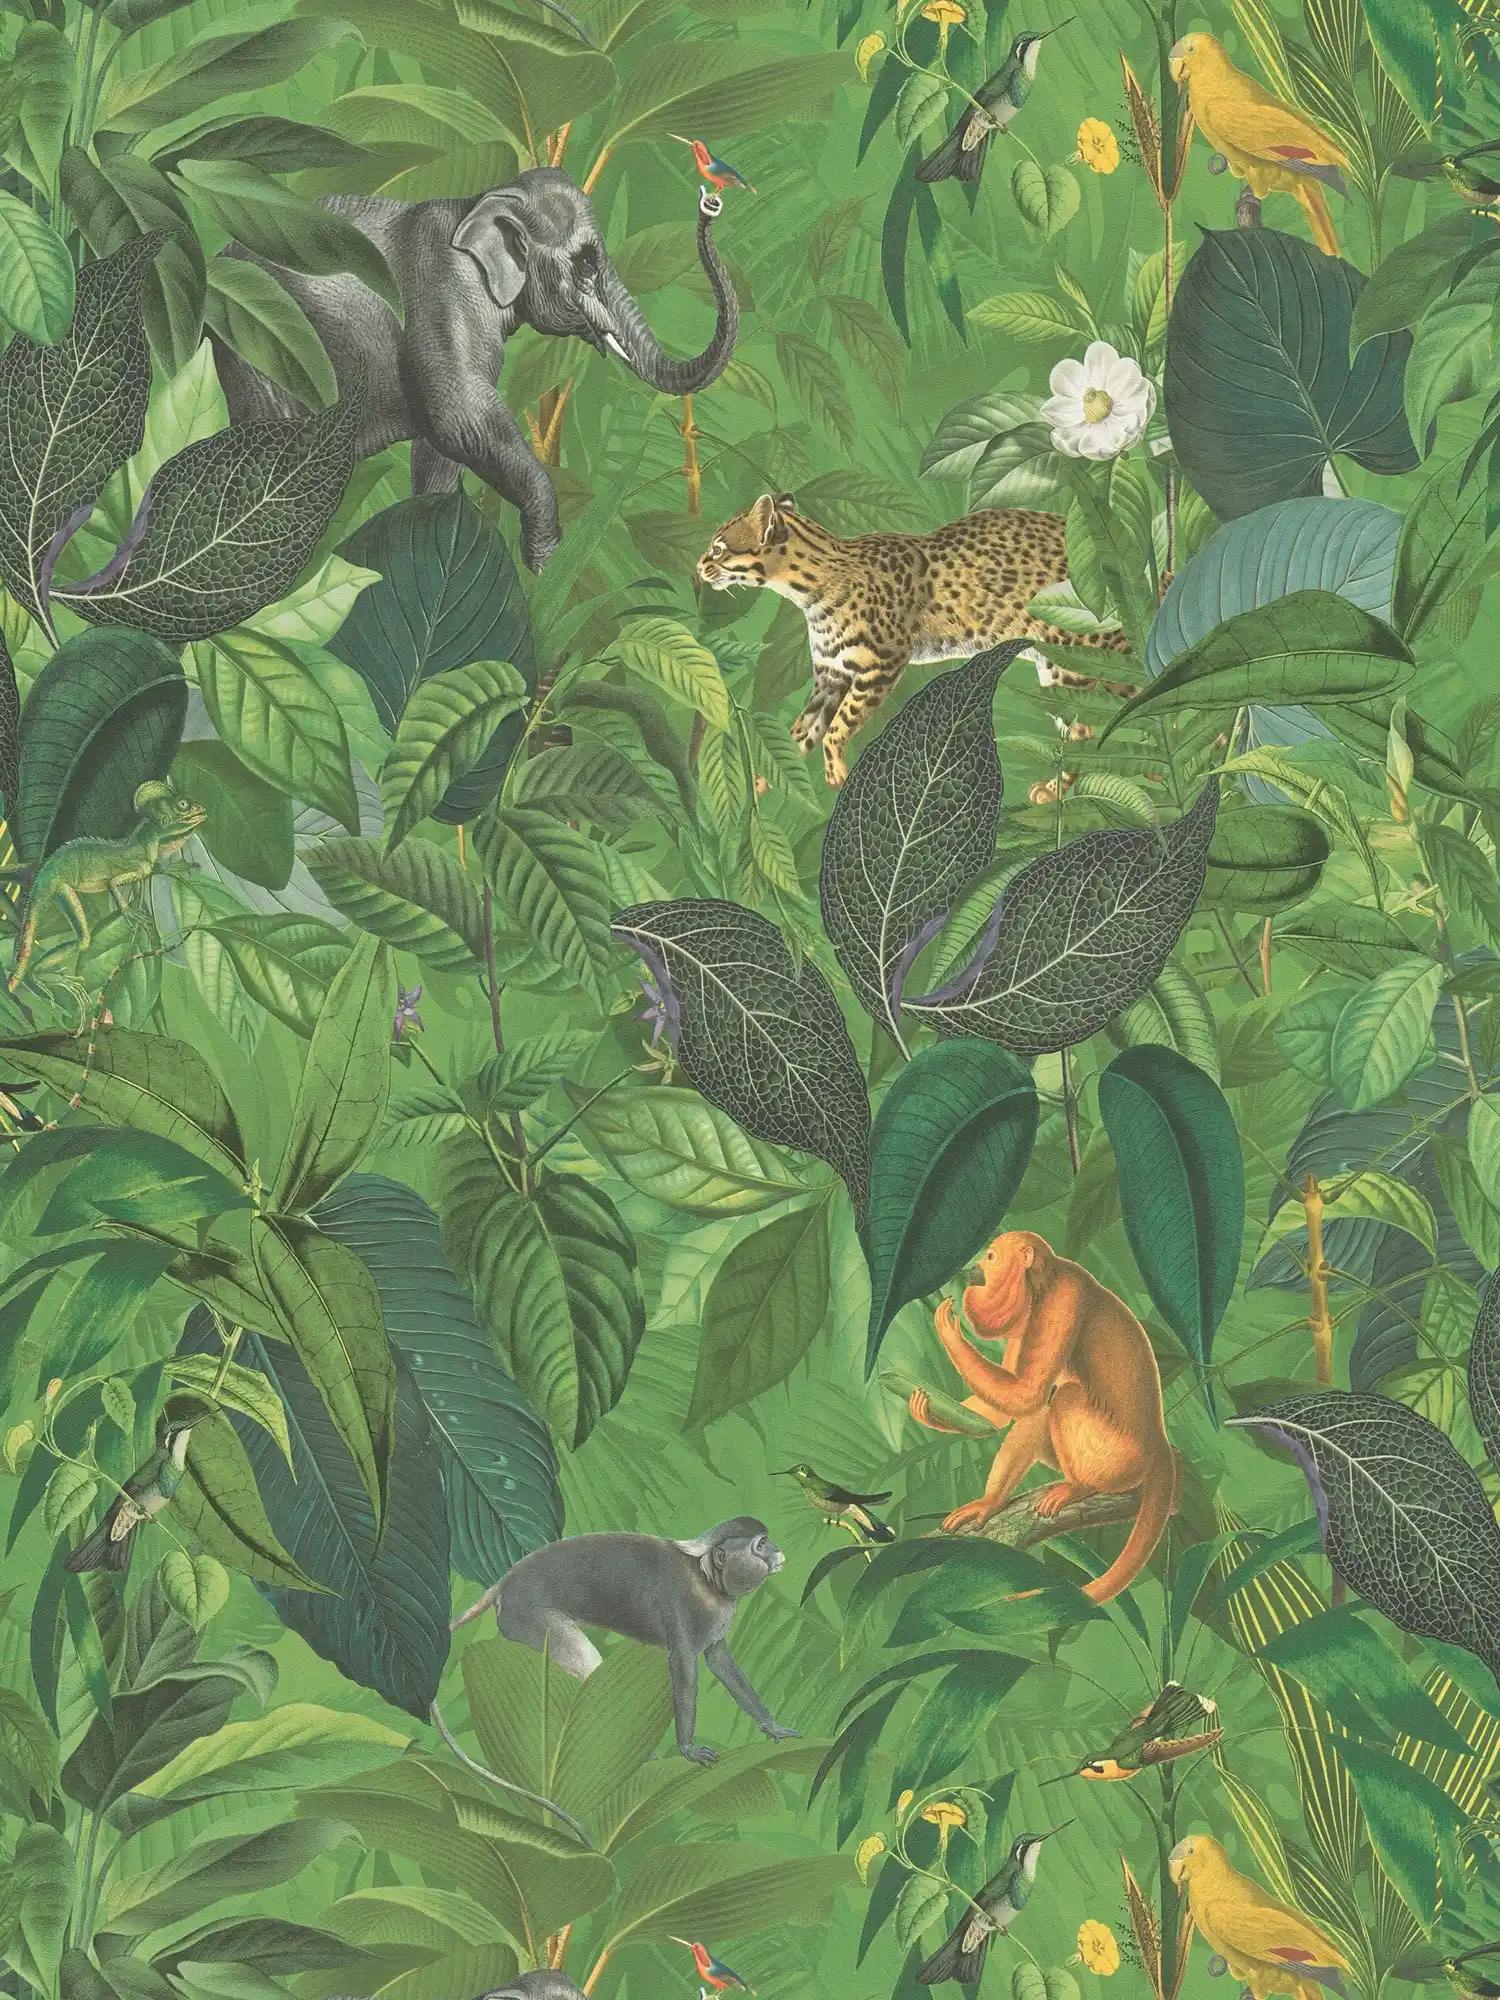 Jungle wallpaper with animals, children motif - green
